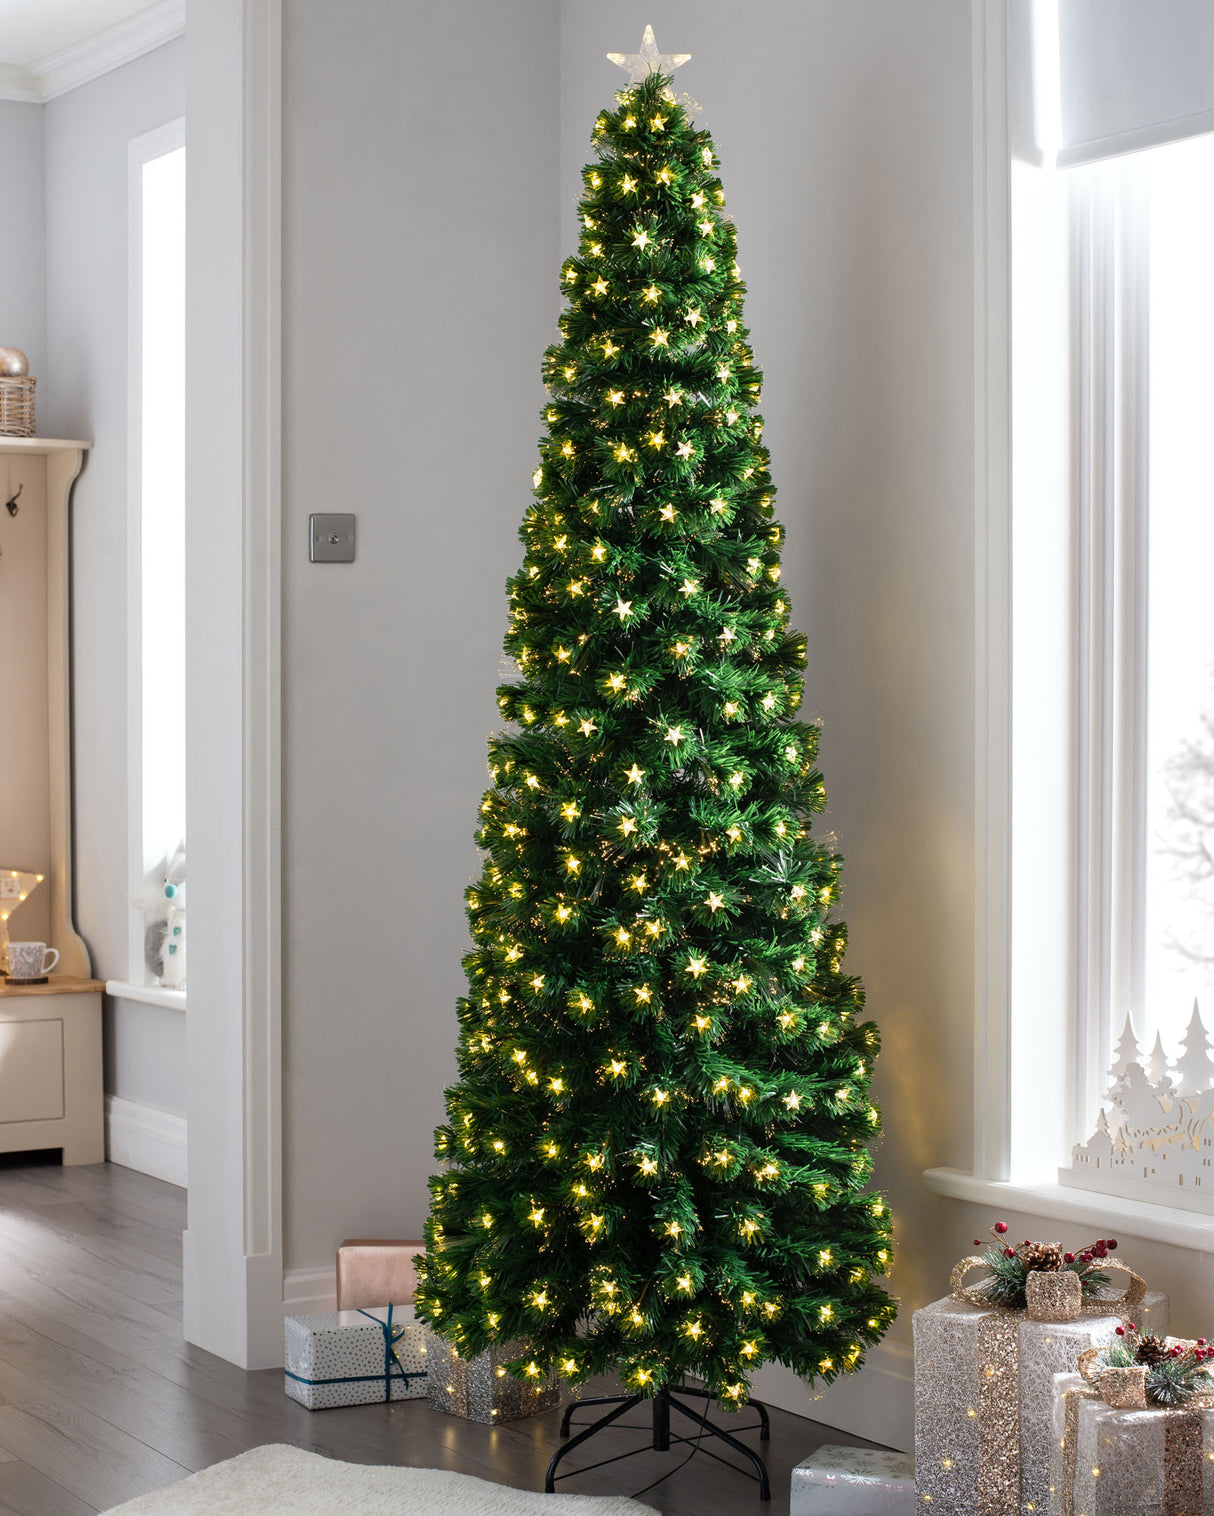 Pre-Lit Fibre Optic Pencil Christmas Tree with Warm White LED Stars